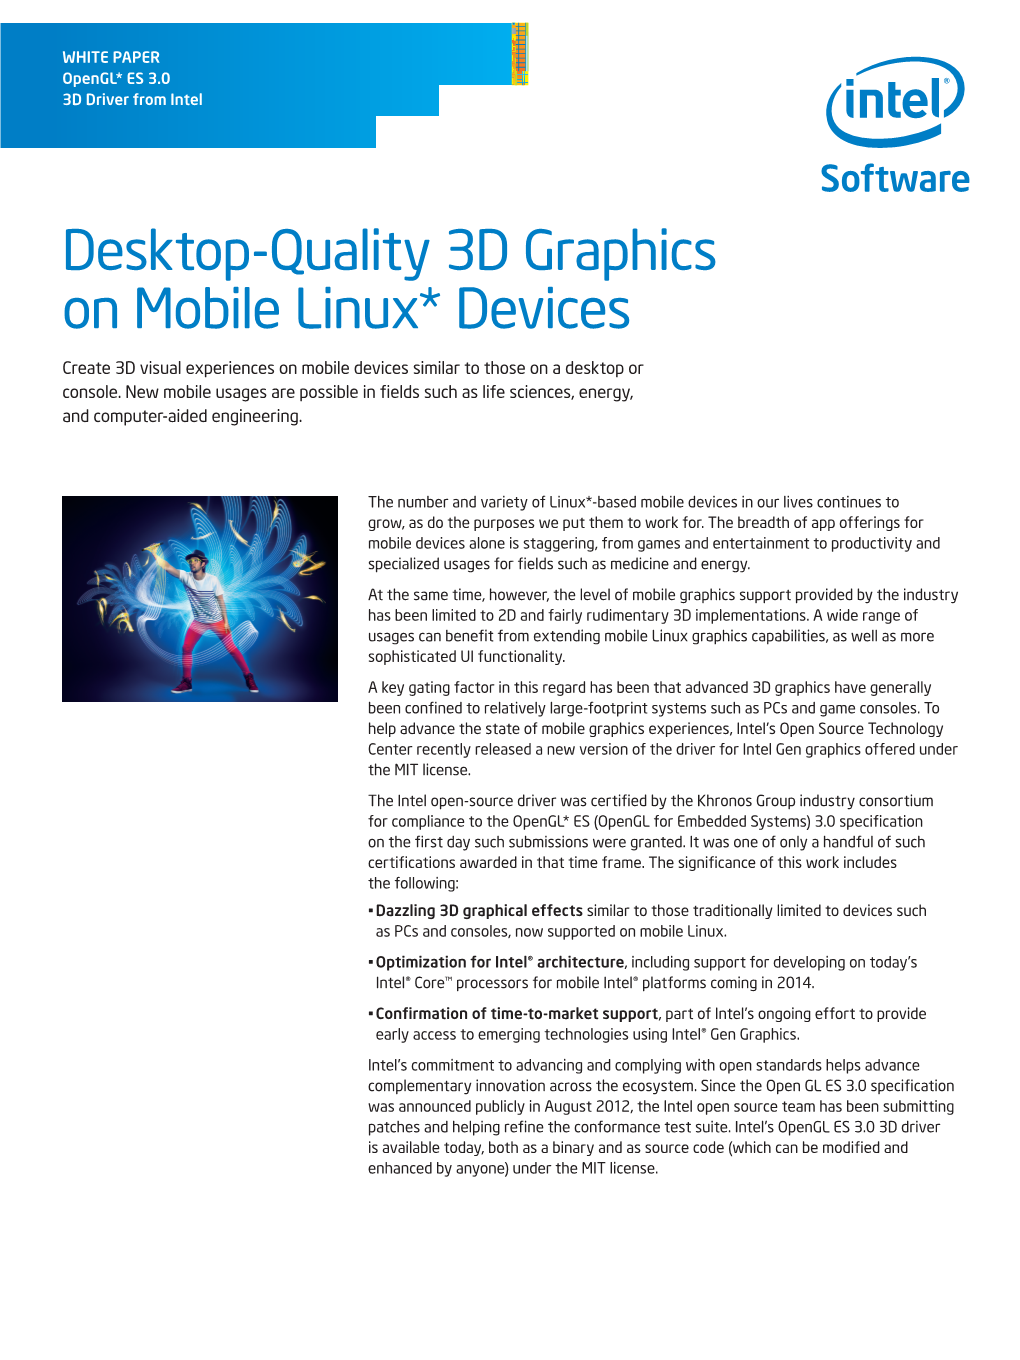 Desktop-Quality 3D Graphics on Mobile Linux* Devices